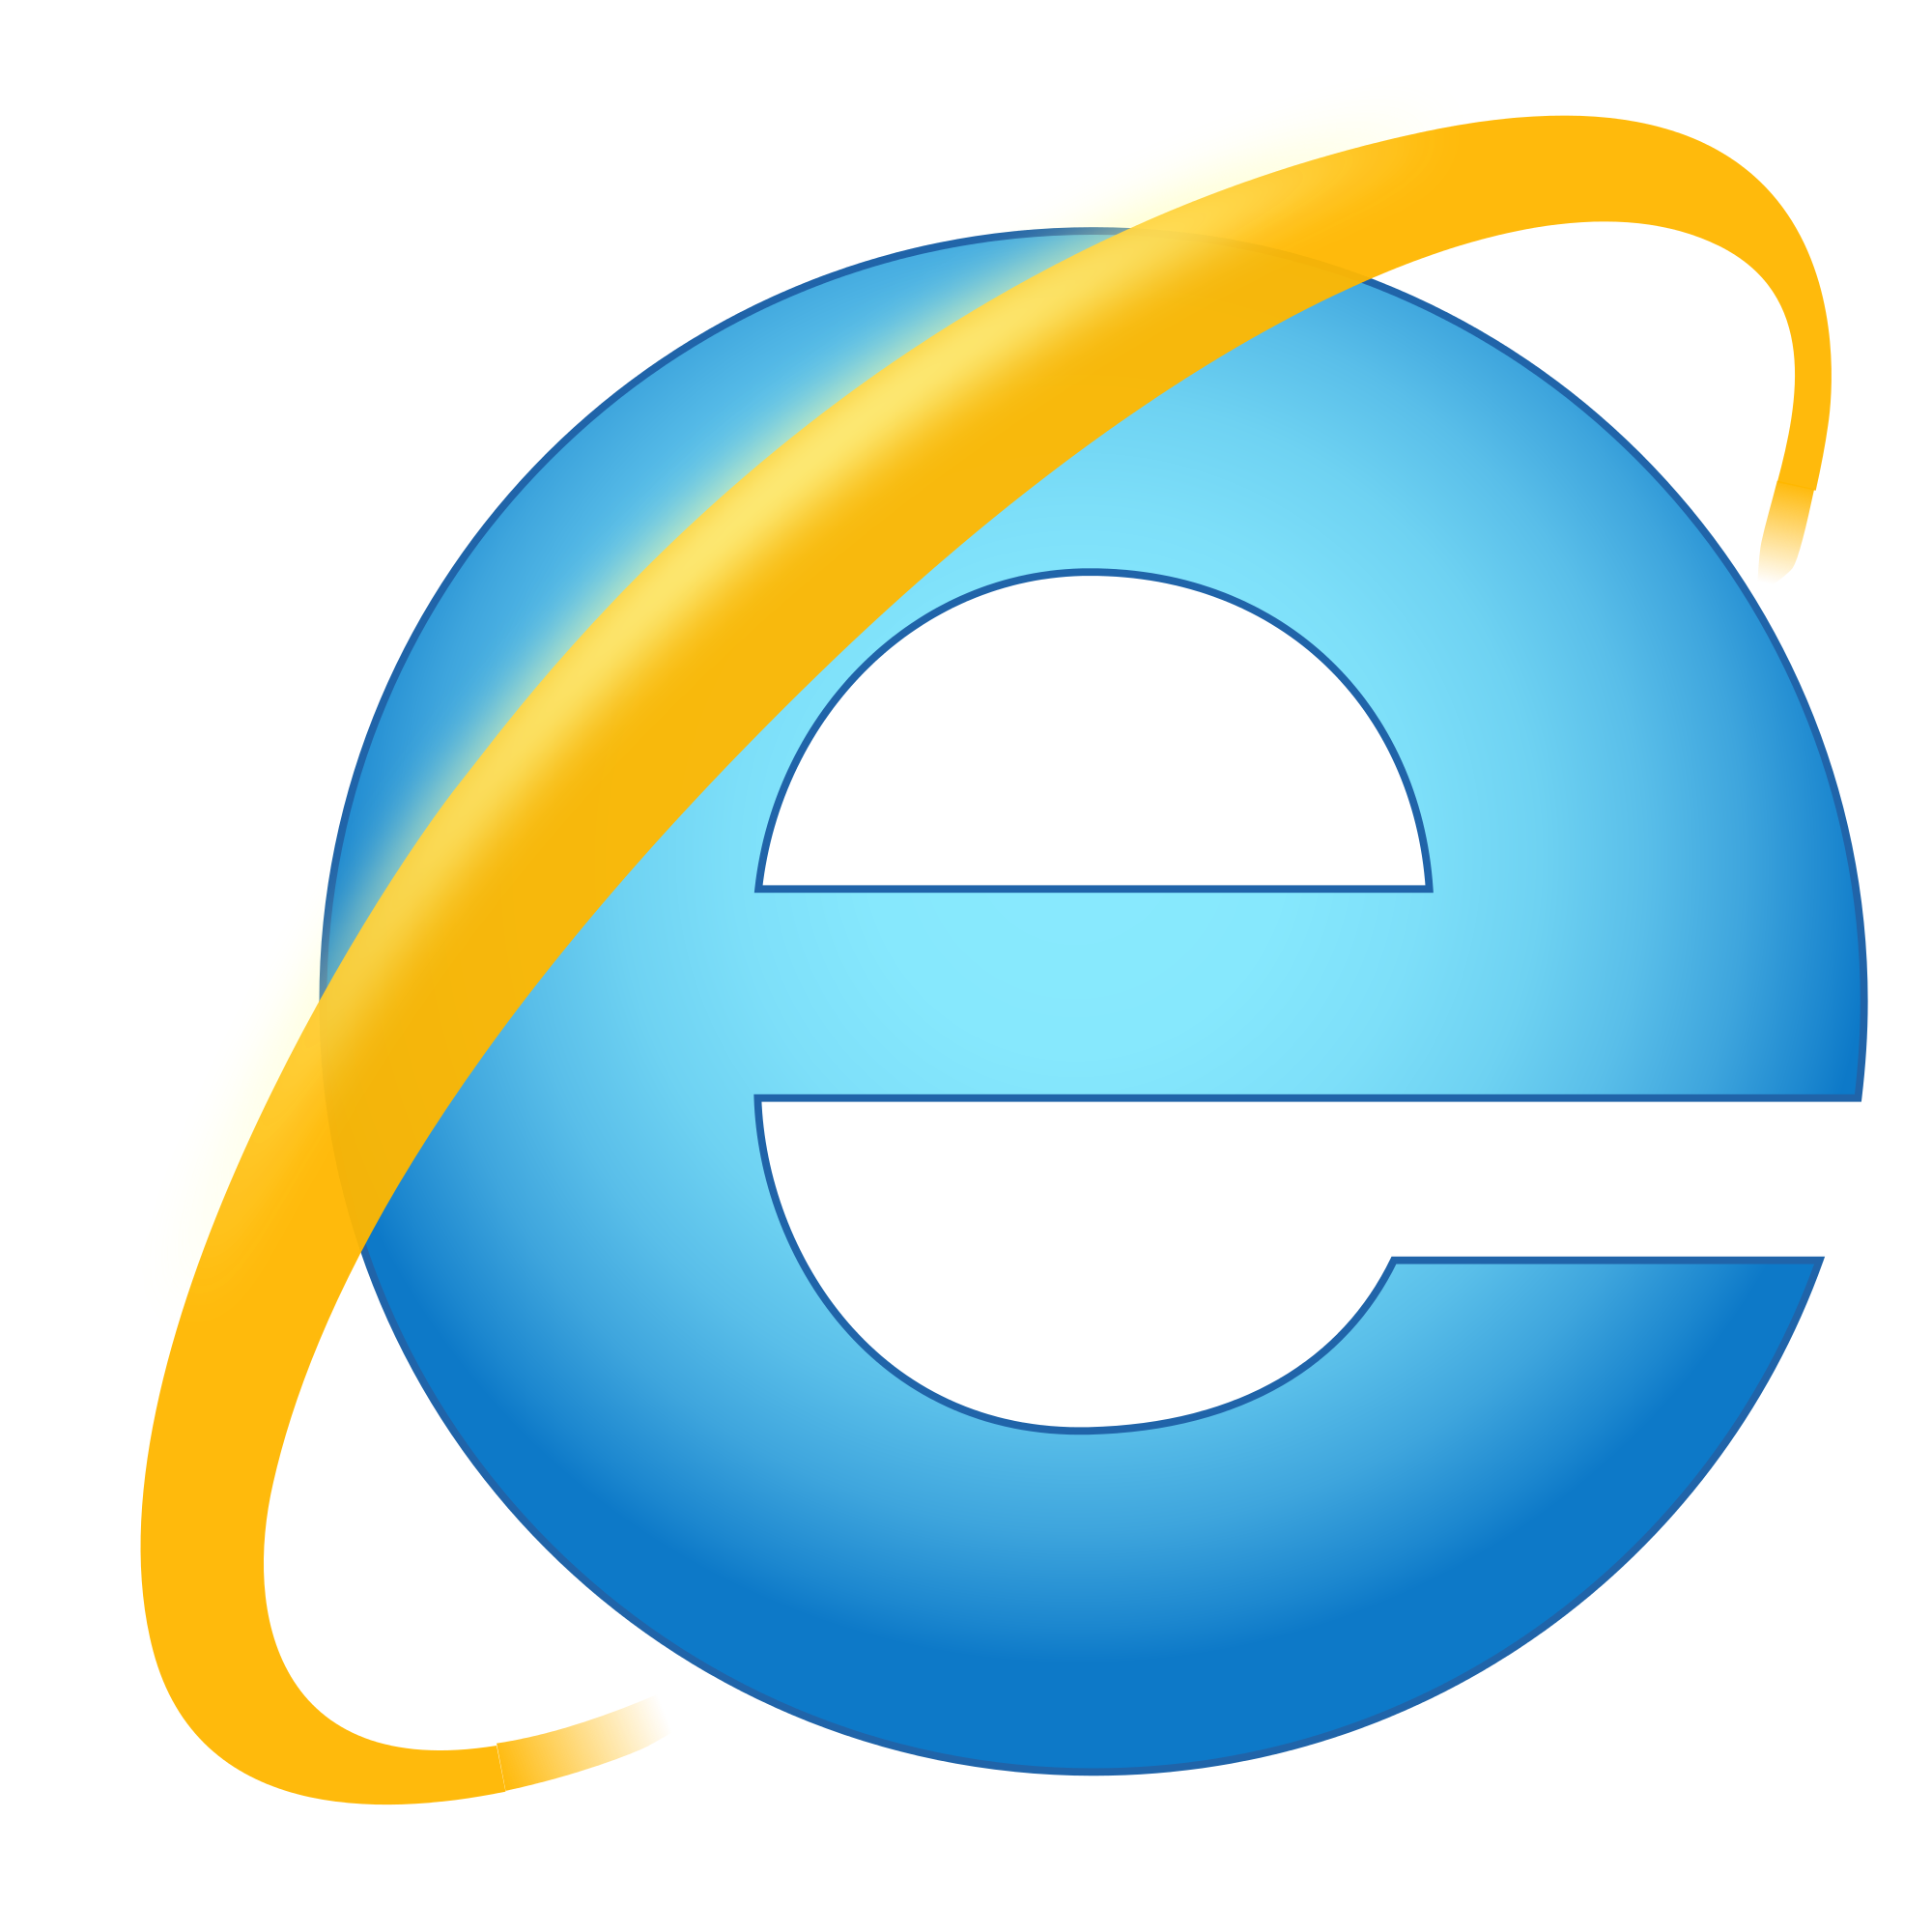 internet explorer, Ie, Browser, microsoft icon